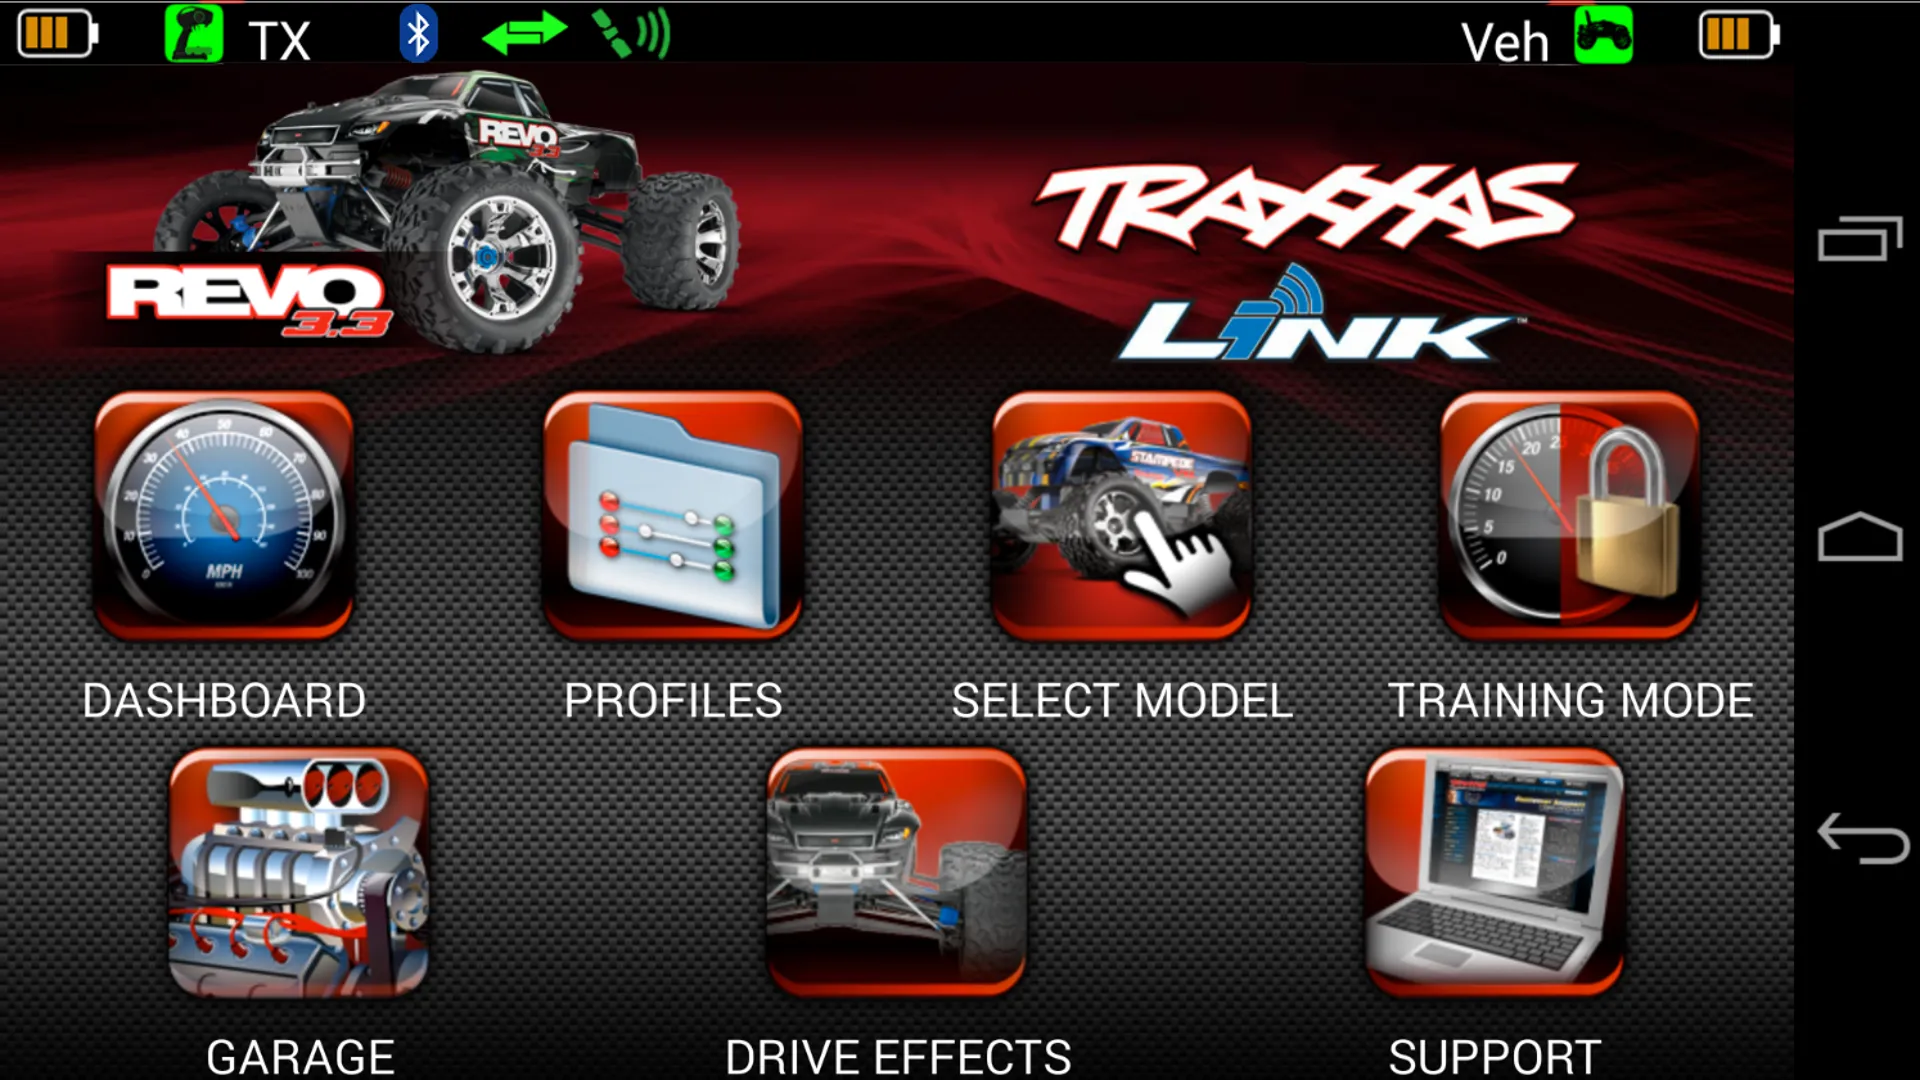 Screenshot of the Traxxas Link App Home Screen